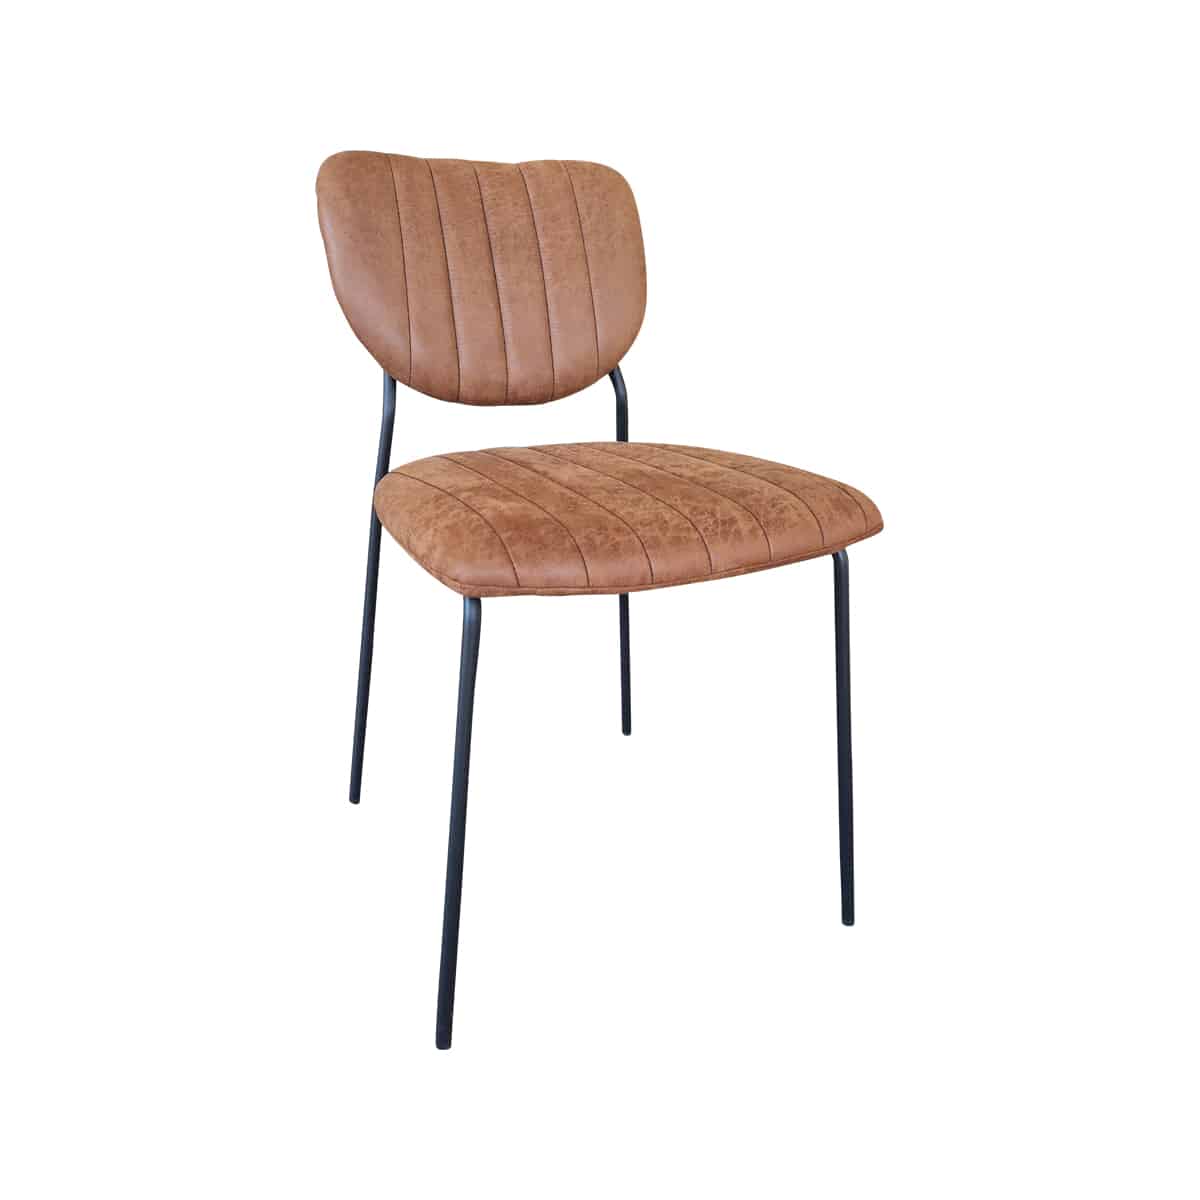 Somatische cel Ochtend presentatie Jazz retro horeca design stoelen bruin black stitching - Super Seat